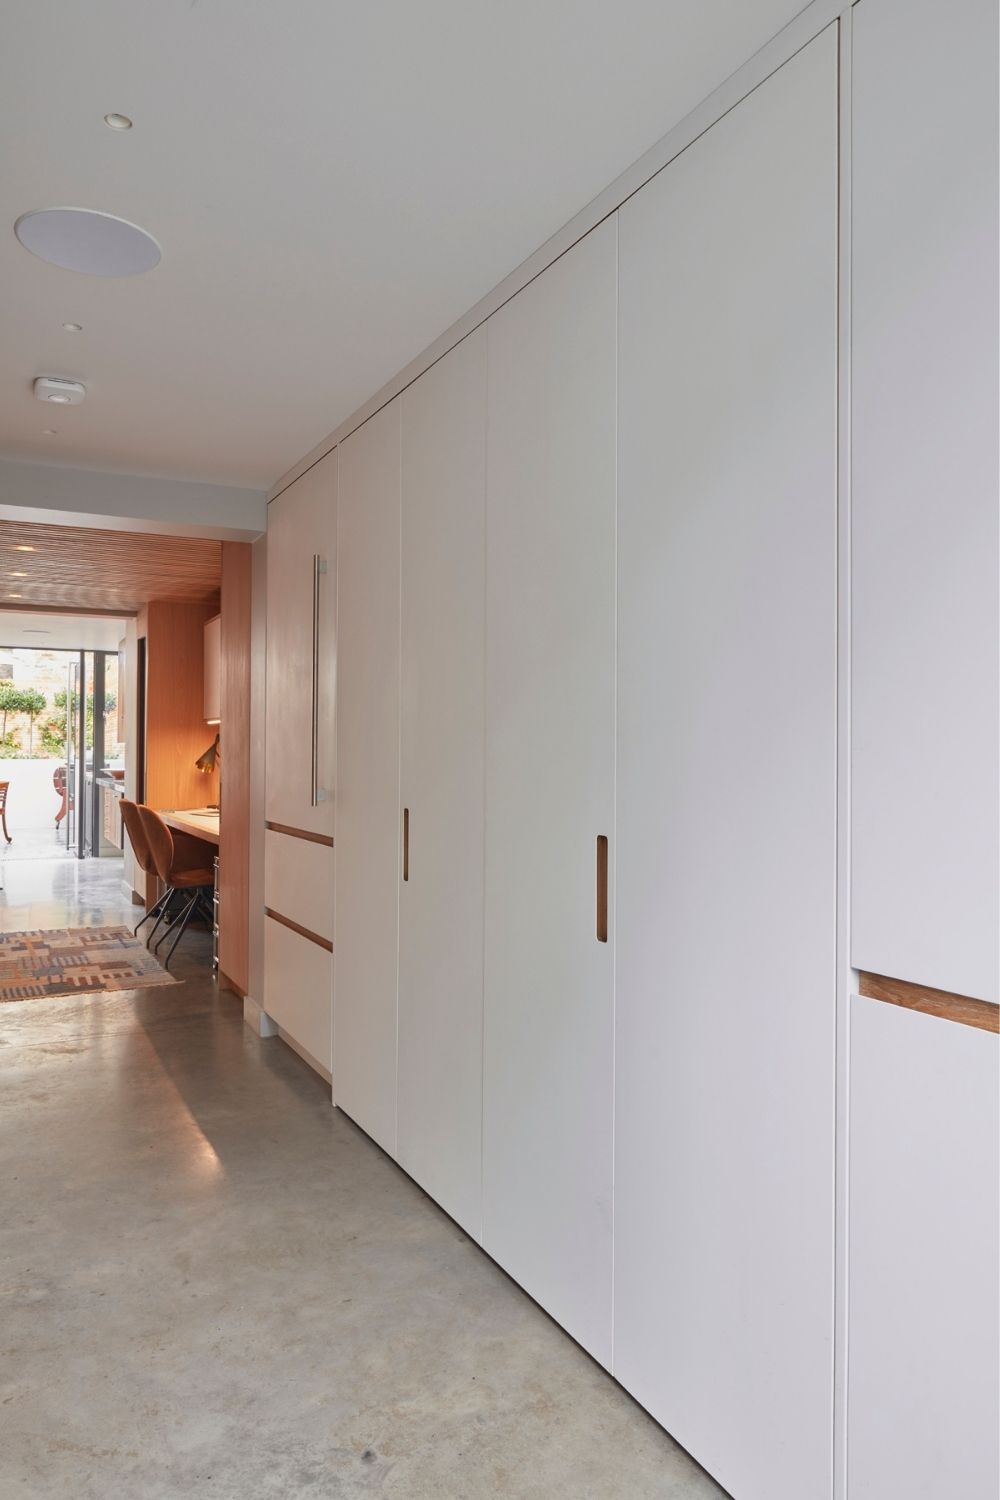 evoke projects ltd islington bespoke hidden kitchen behind full height doors